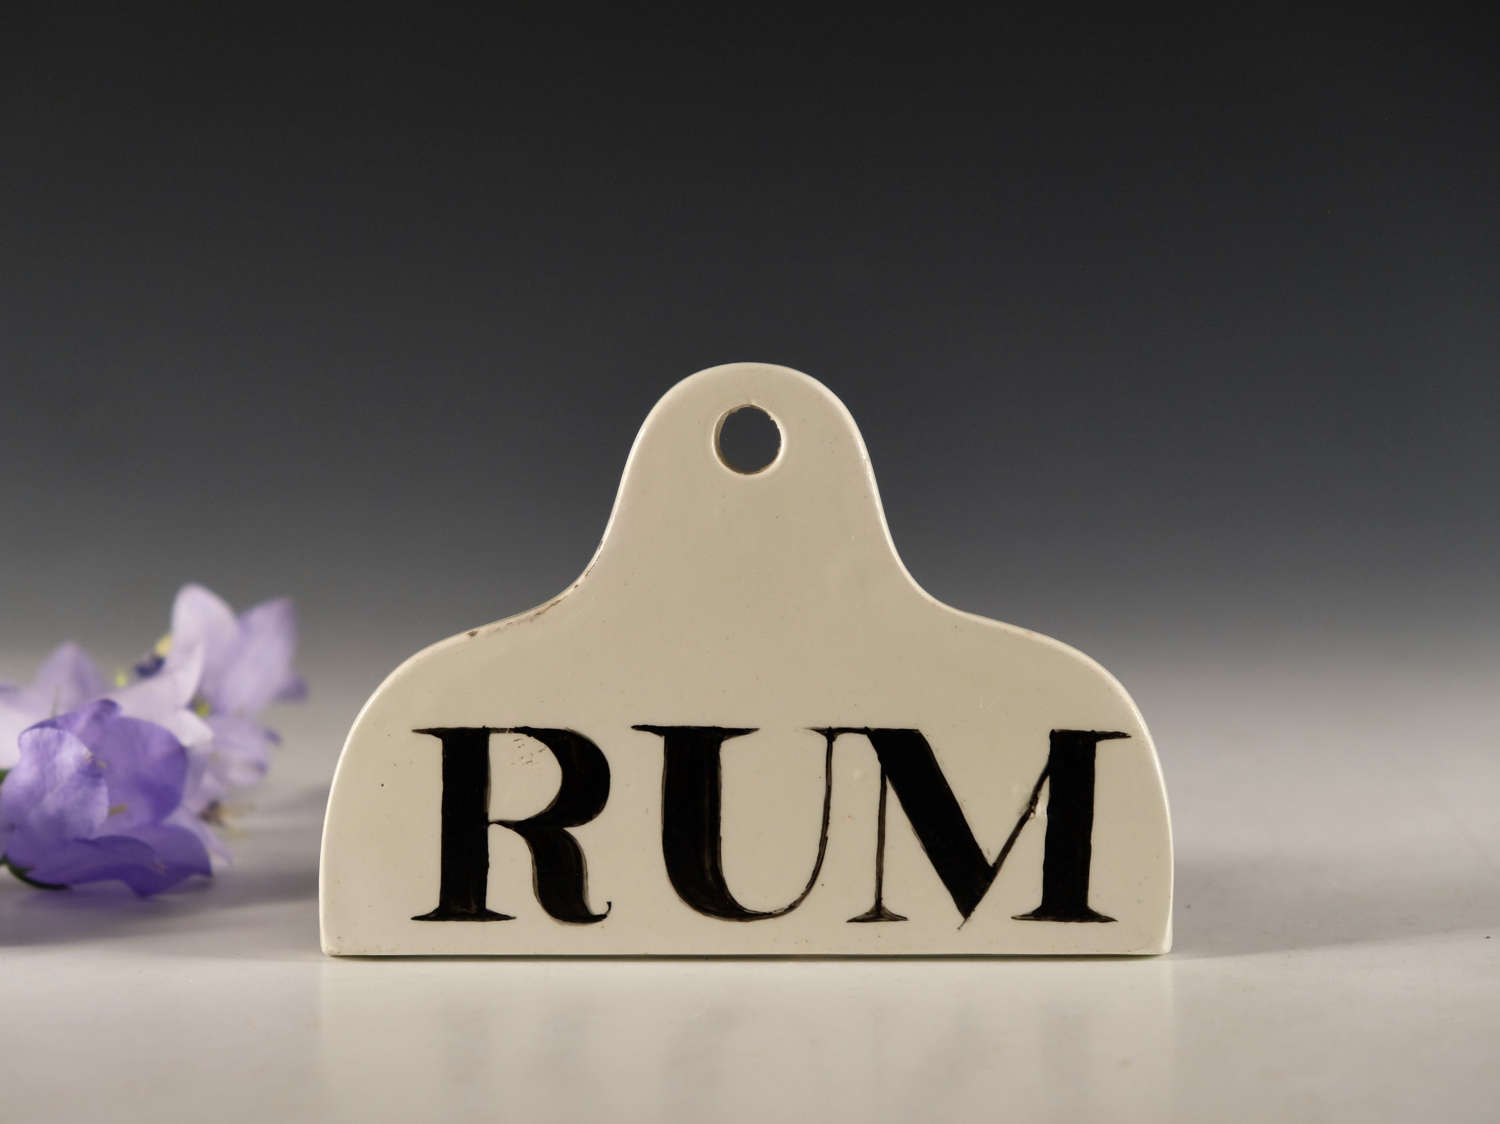 Bin label - Rum mid 19th century